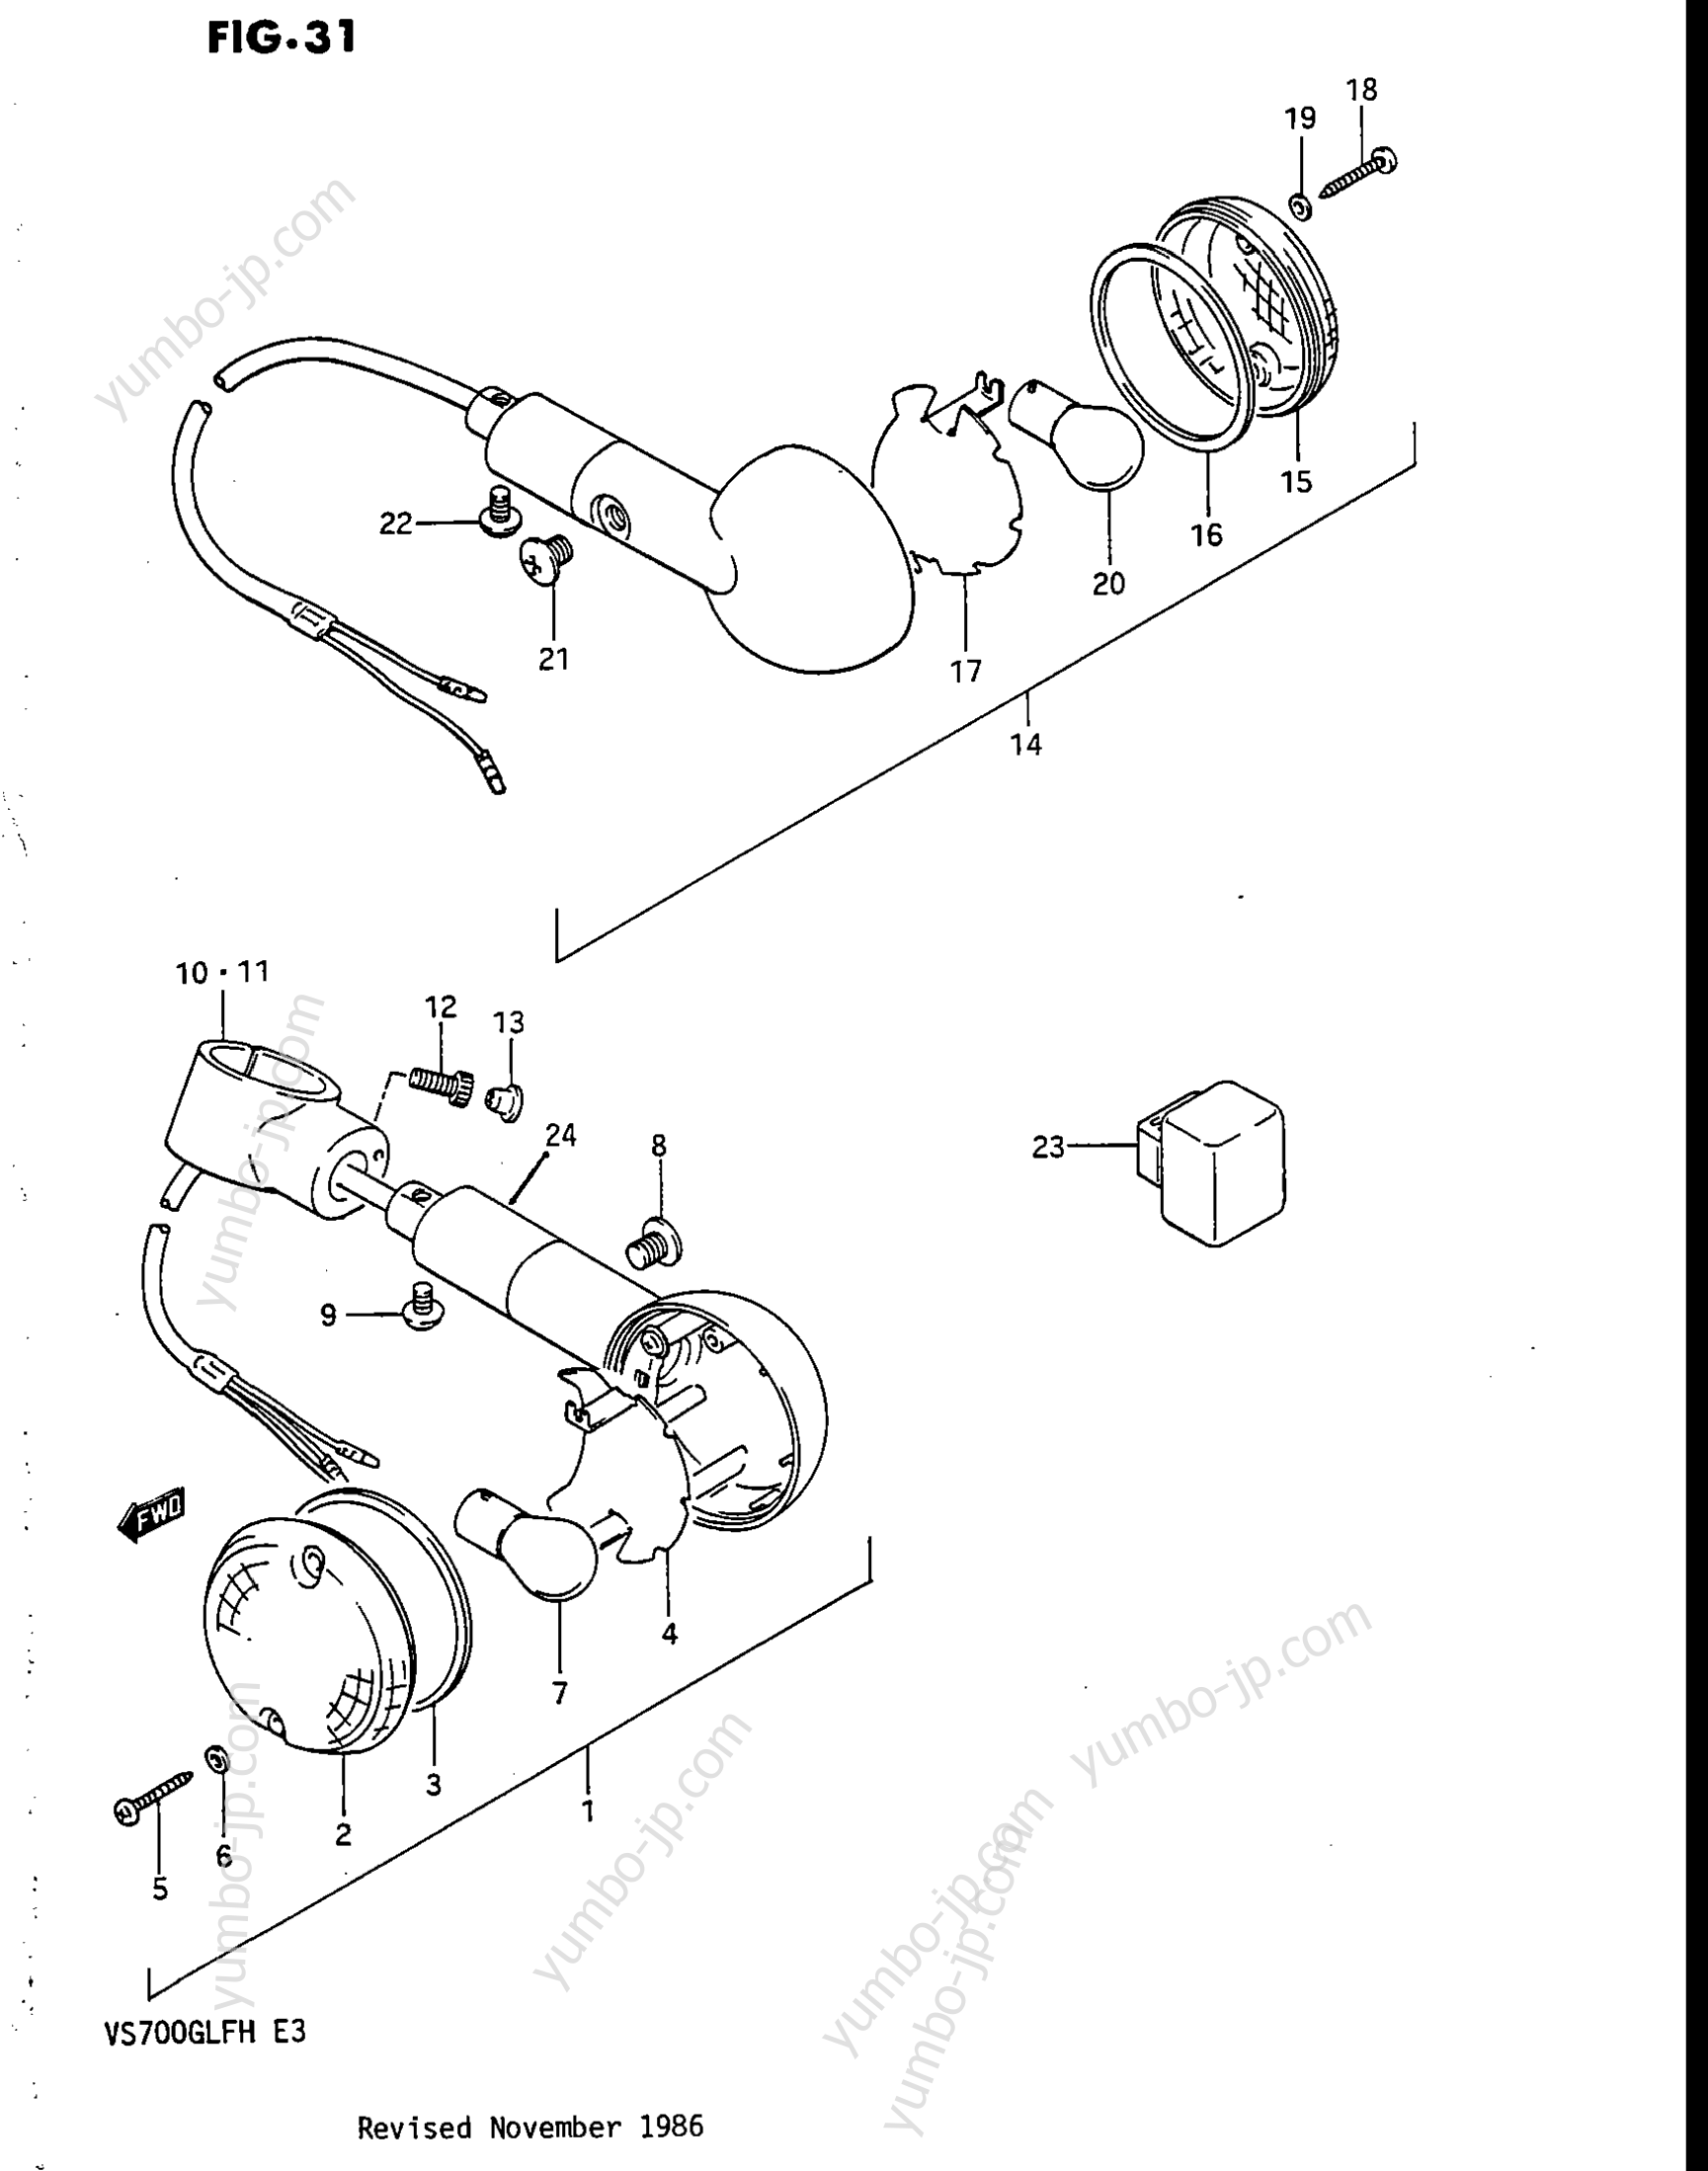 TURN SIGNAL LAMP for motorcycles SUZUKI Intruder (VS700GLEF) 1986 year